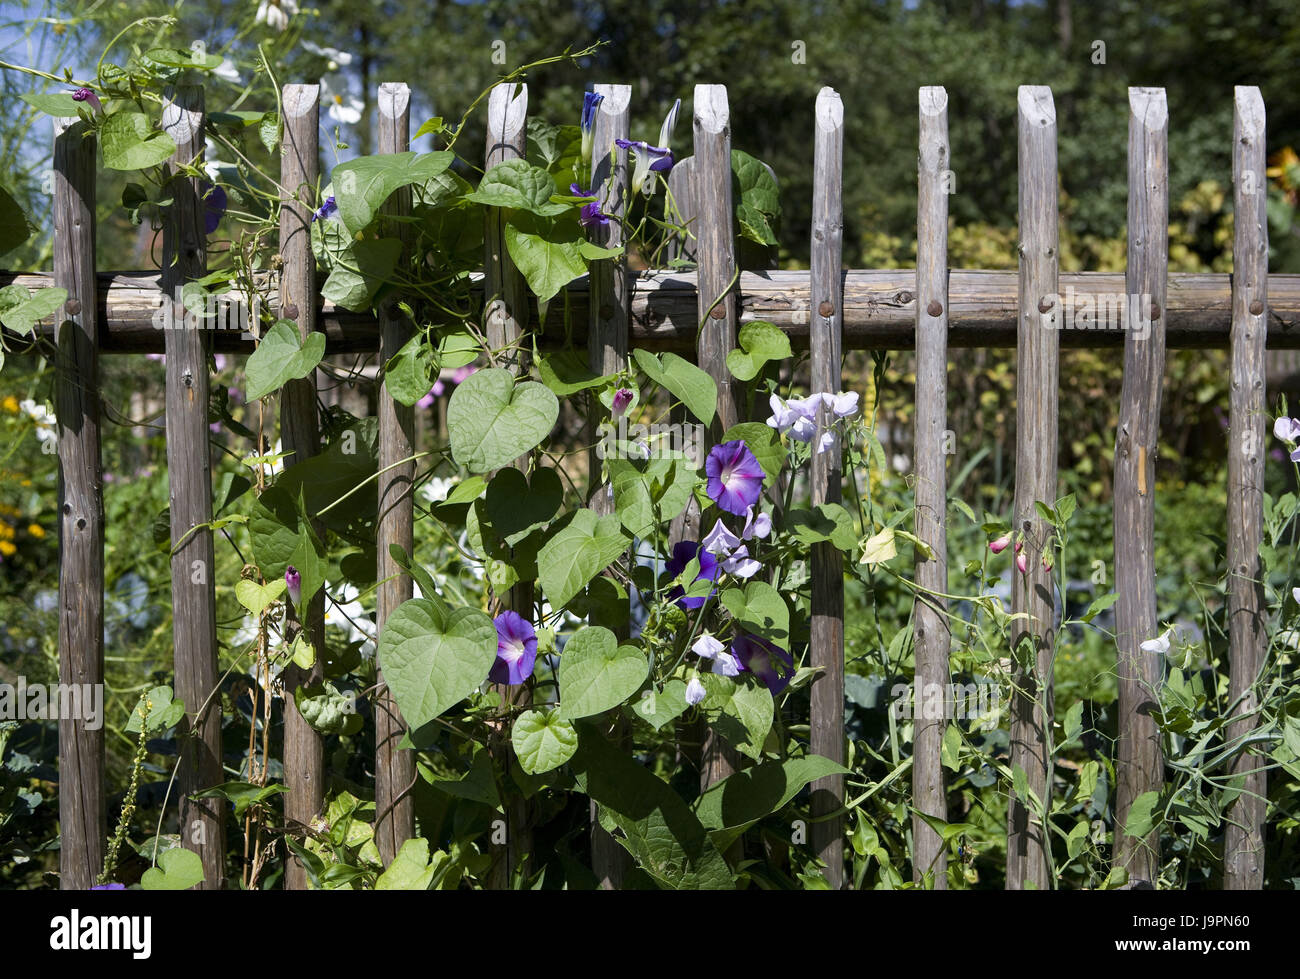 Garden fence,flowers,funnel winch,detail, Stock Photo